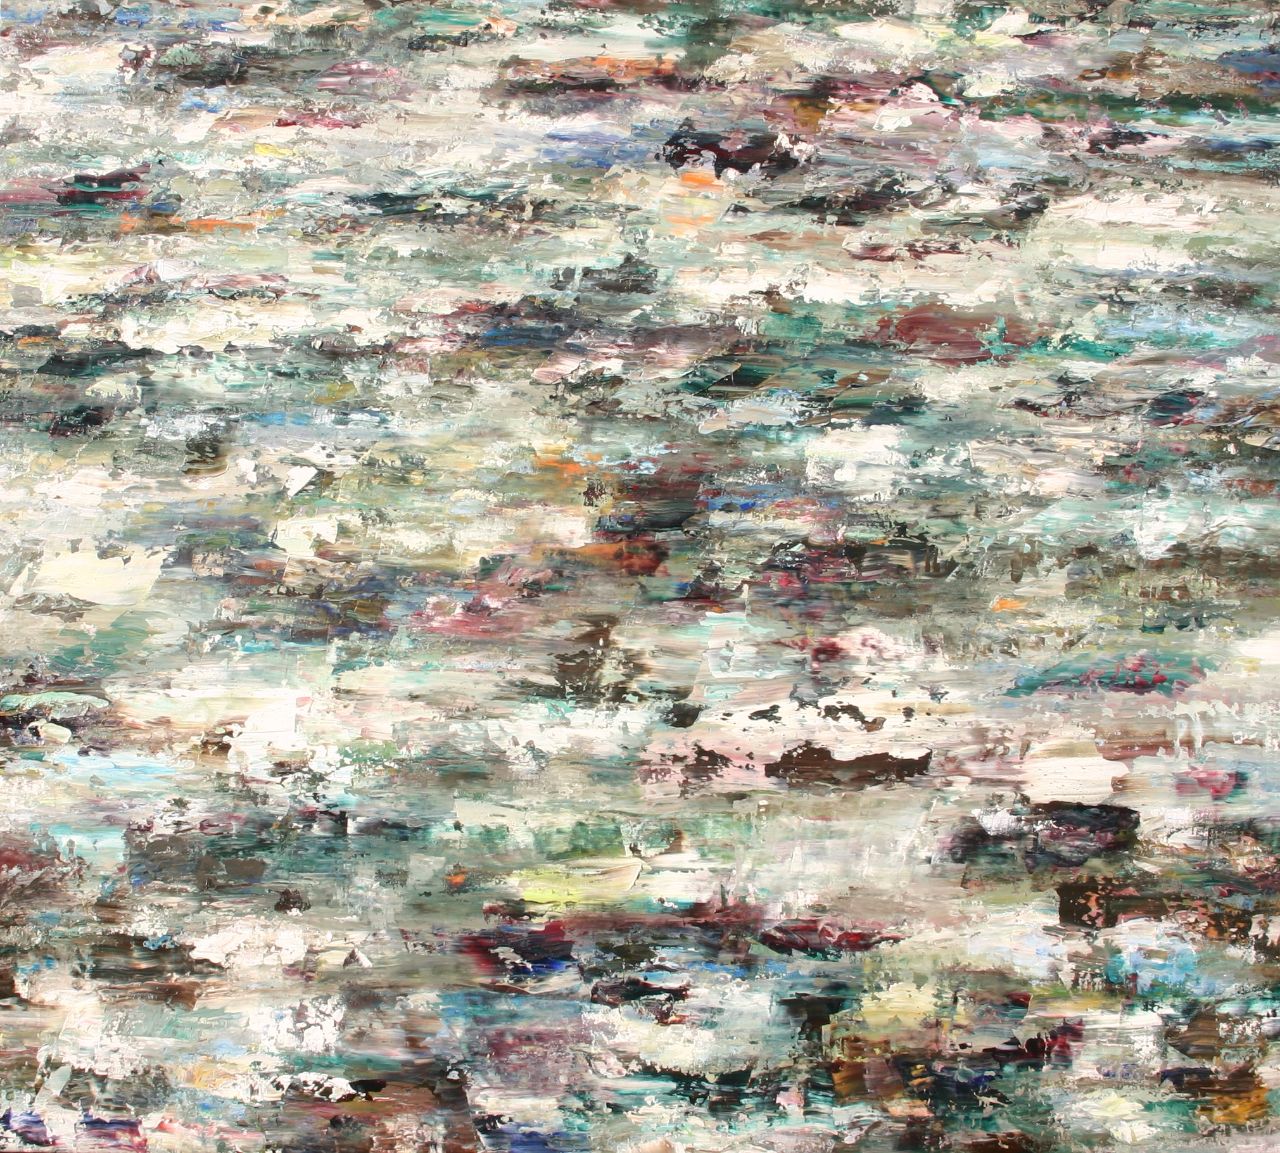 Rudi Weiss, Fluss, 26-2015, Öl auf Leinwand, 130 cm x 145 cm, Preis: 5.200 €, wer048ko